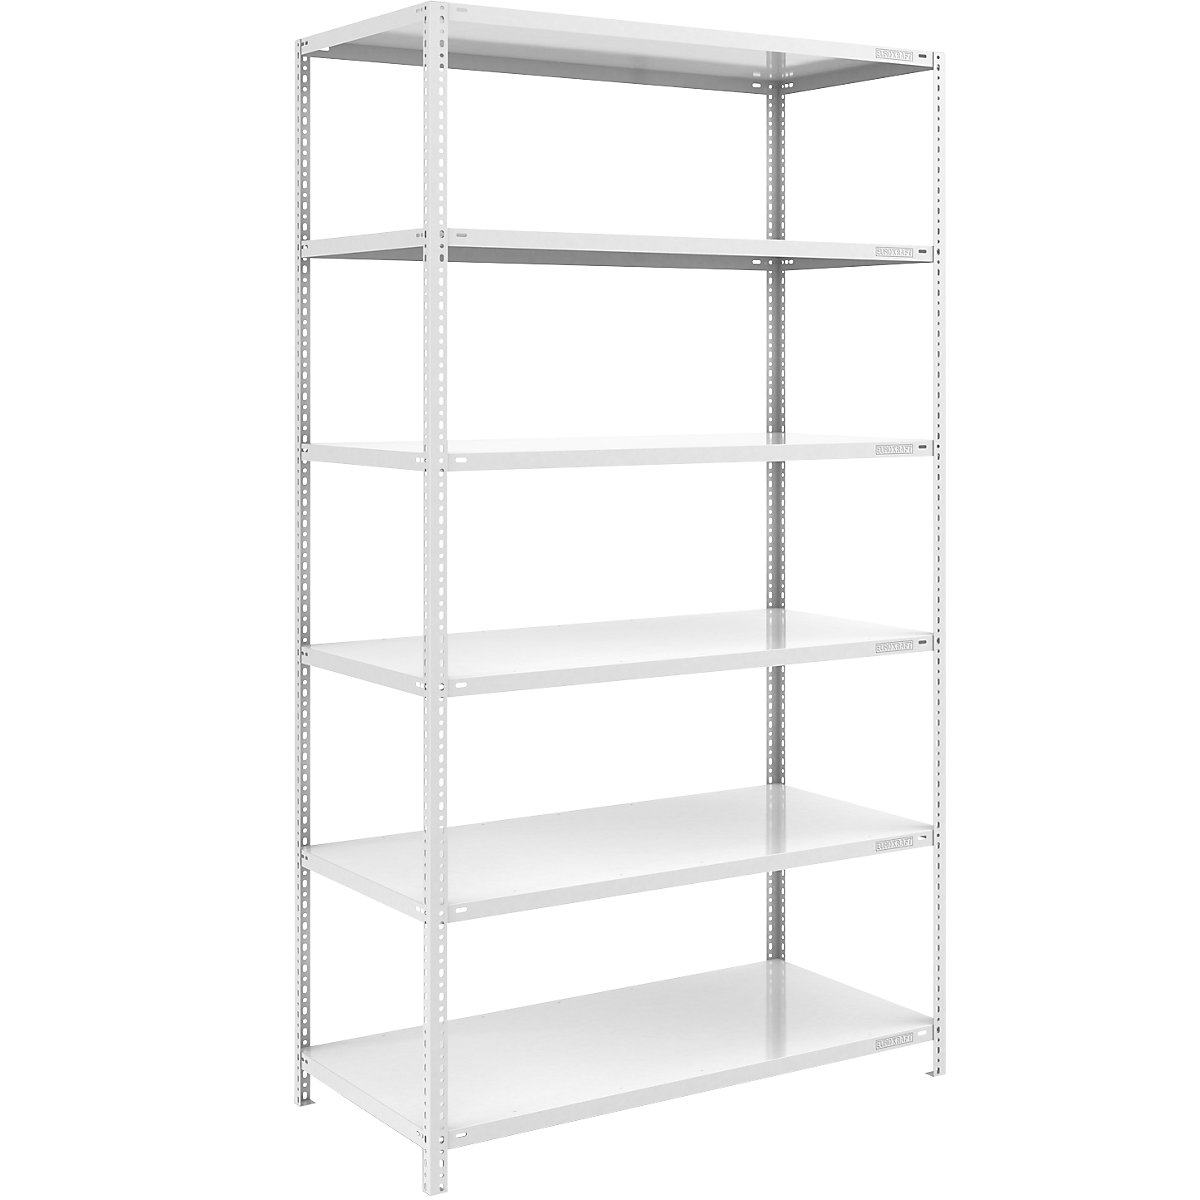 Bolt-together shelf unit, light duty, plastic coated – eurokraft pro, shelf unit height 2500 mm, shelf width 1300 mm, depth 800 mm, standard shelf unit-8